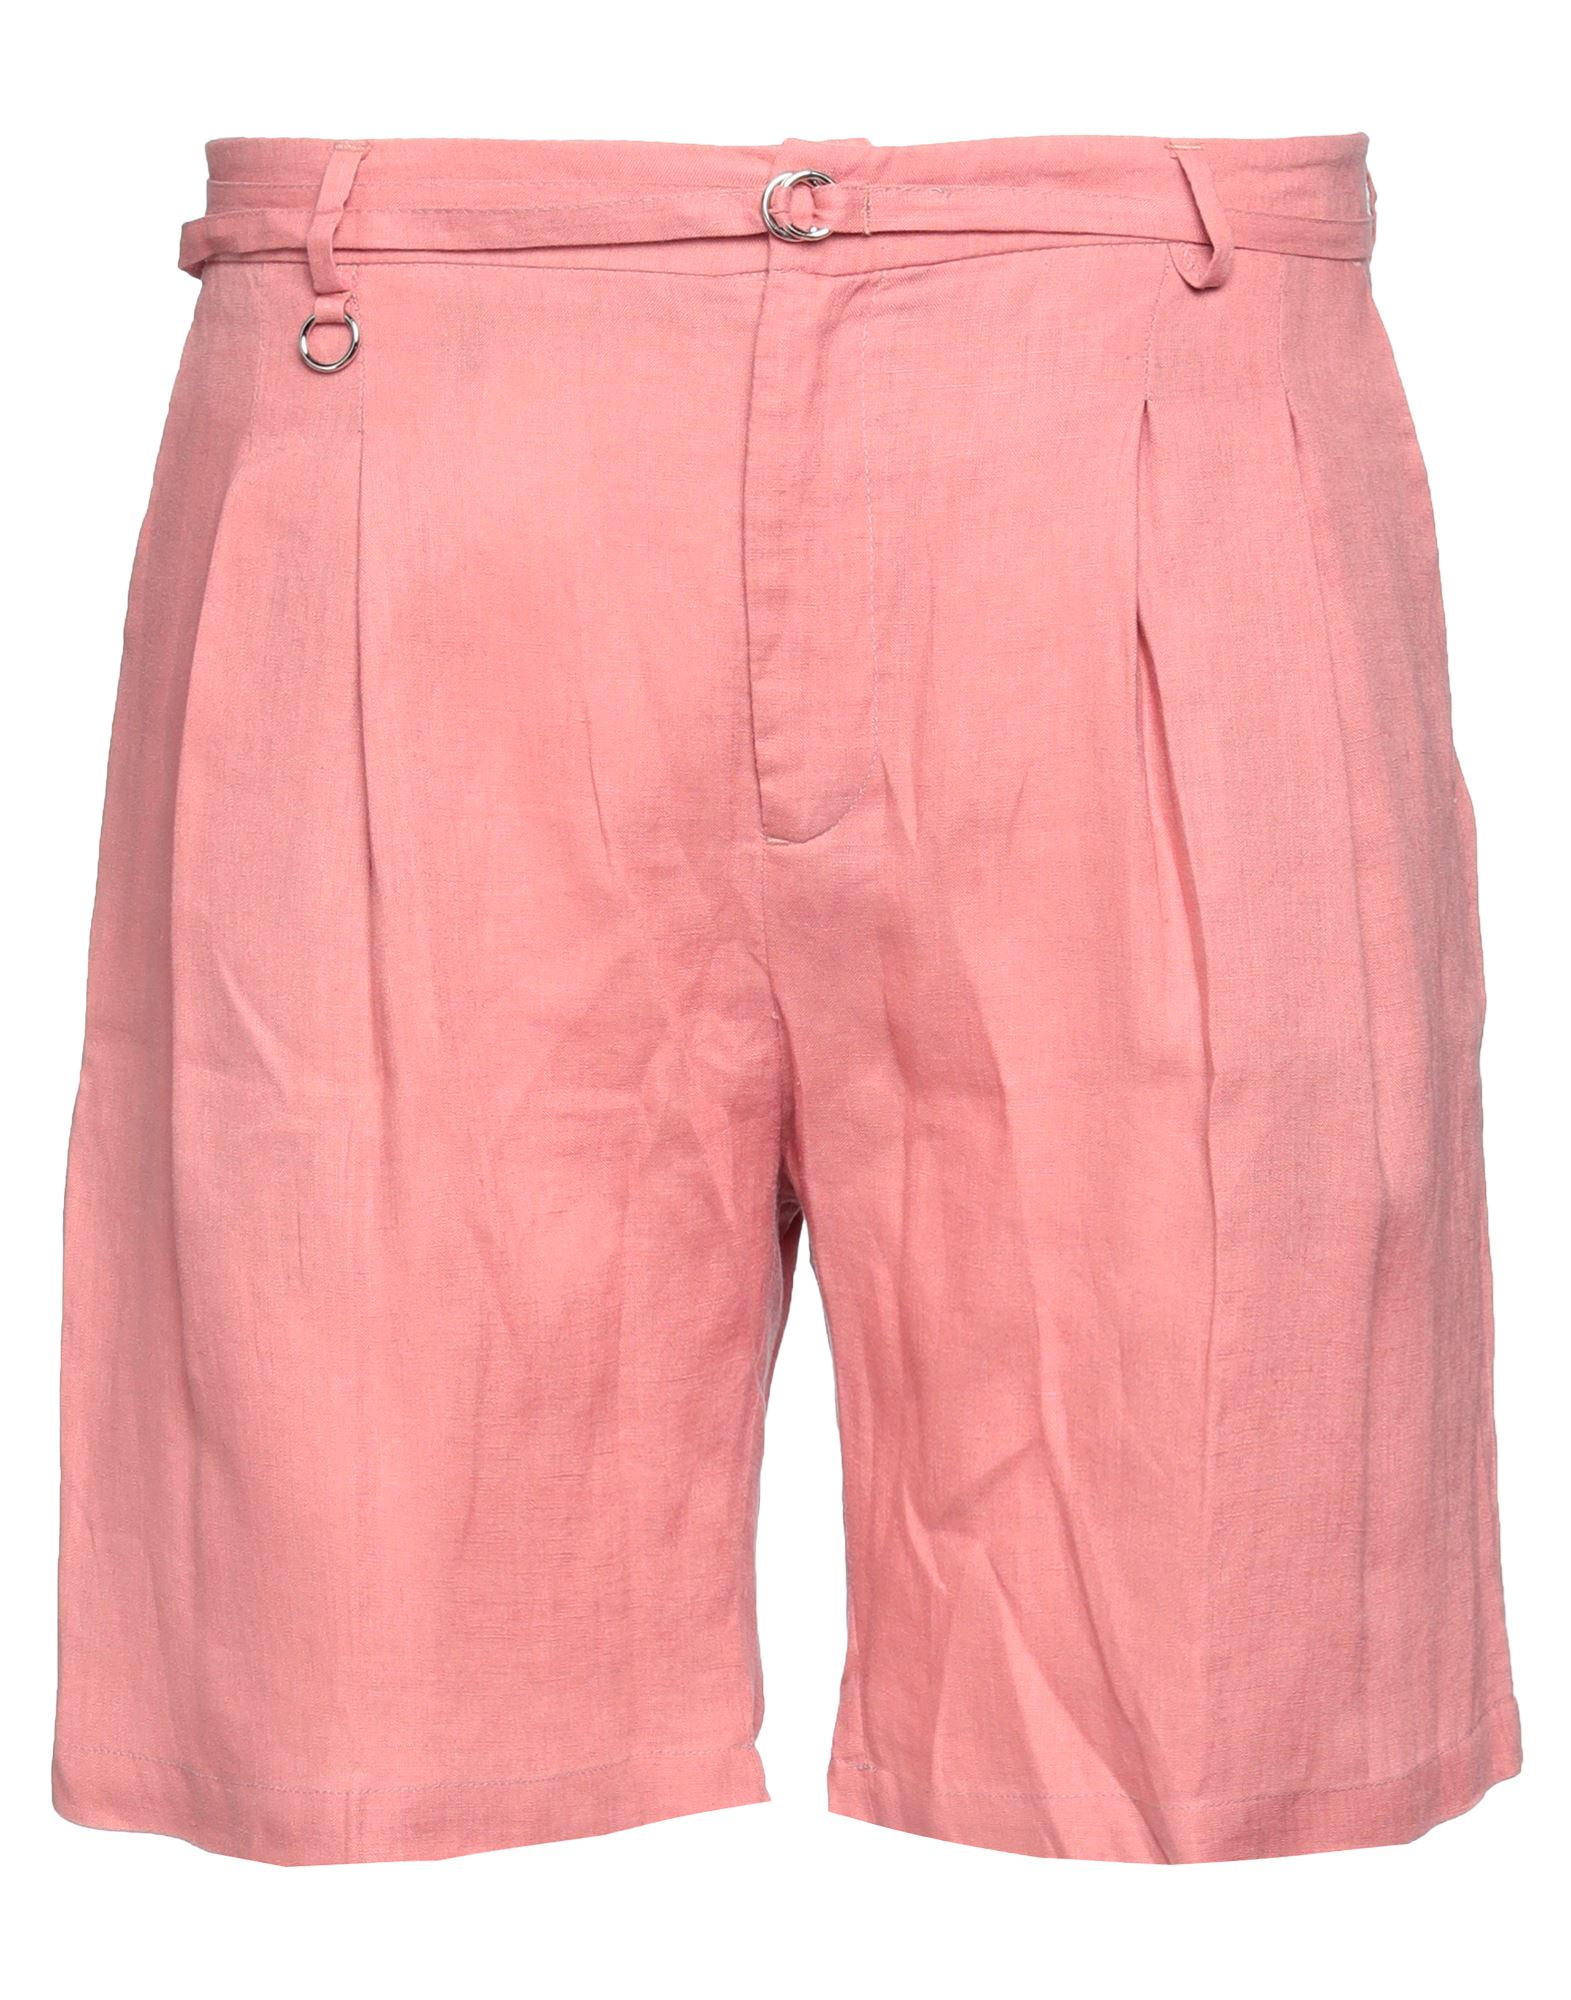 Golden Craft 1957 Man Shorts & Bermuda Shorts Pastel Pink Size 32 Linen